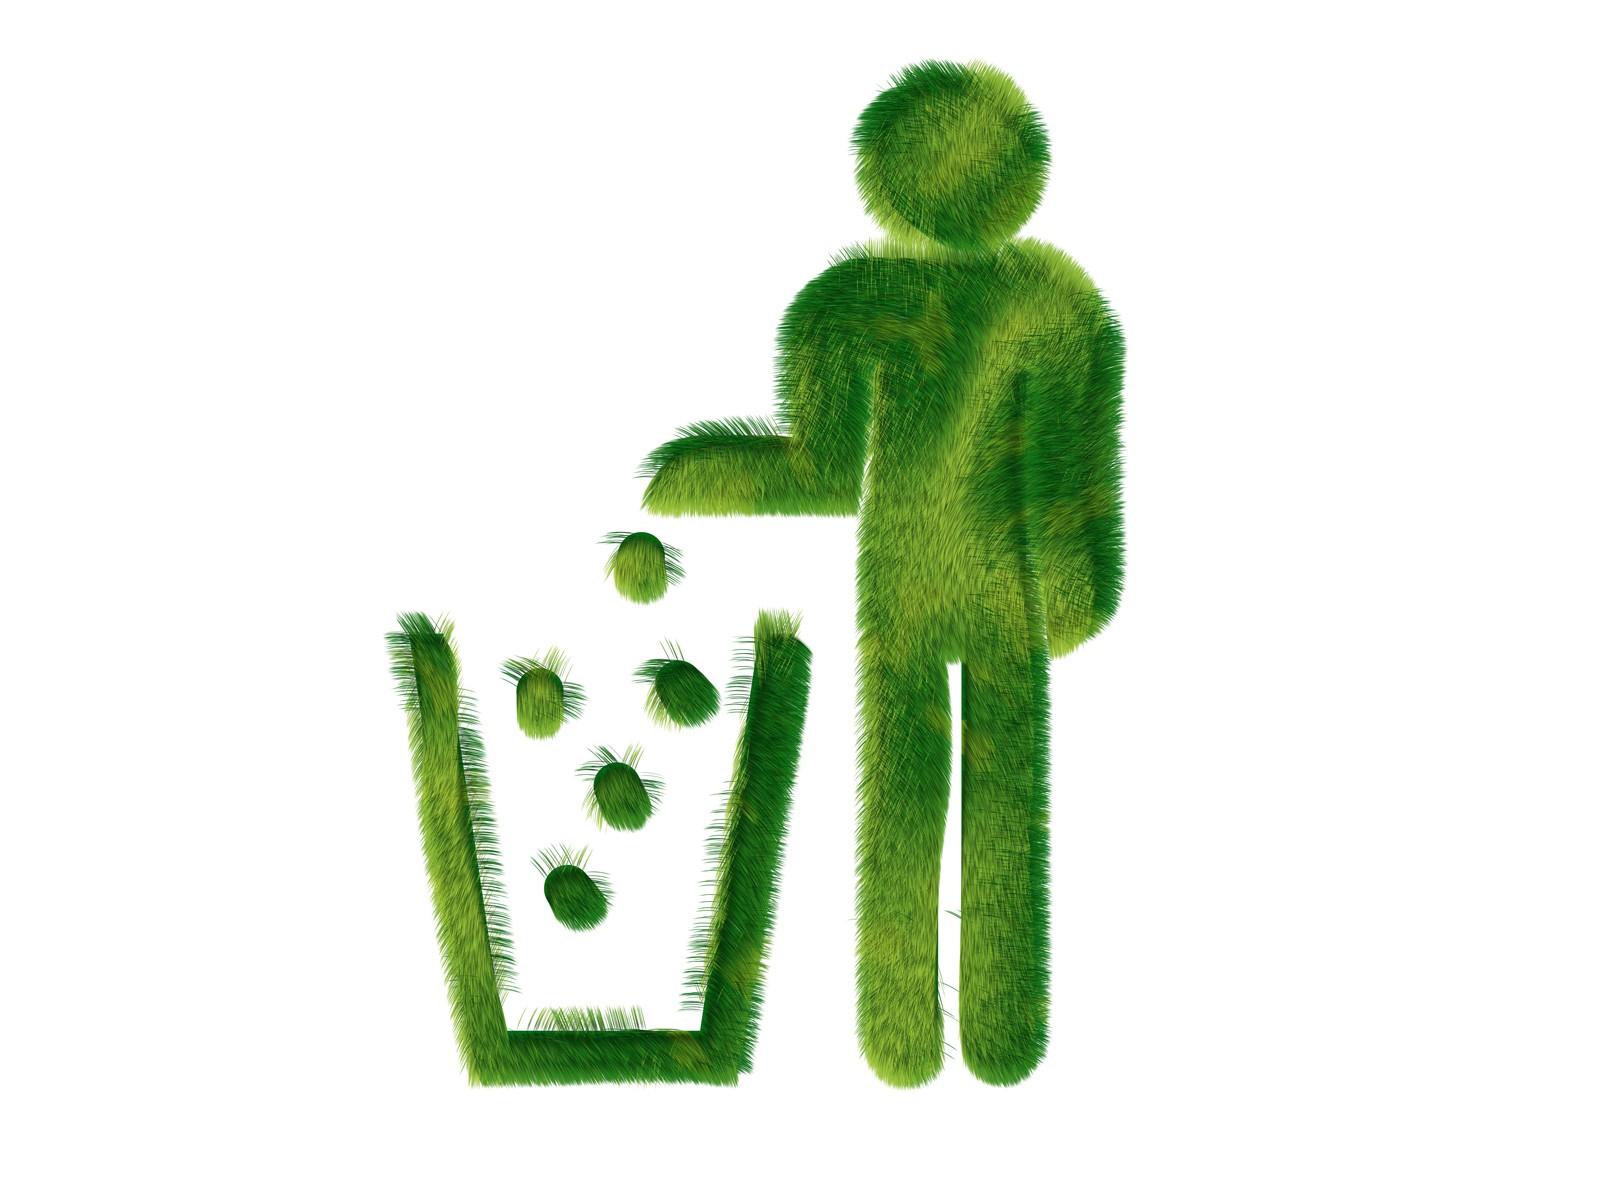 Eco Friendly Symbols Symbols And Environmental Green Icons 1600x1200 NO.19 Desktop Wallpaper